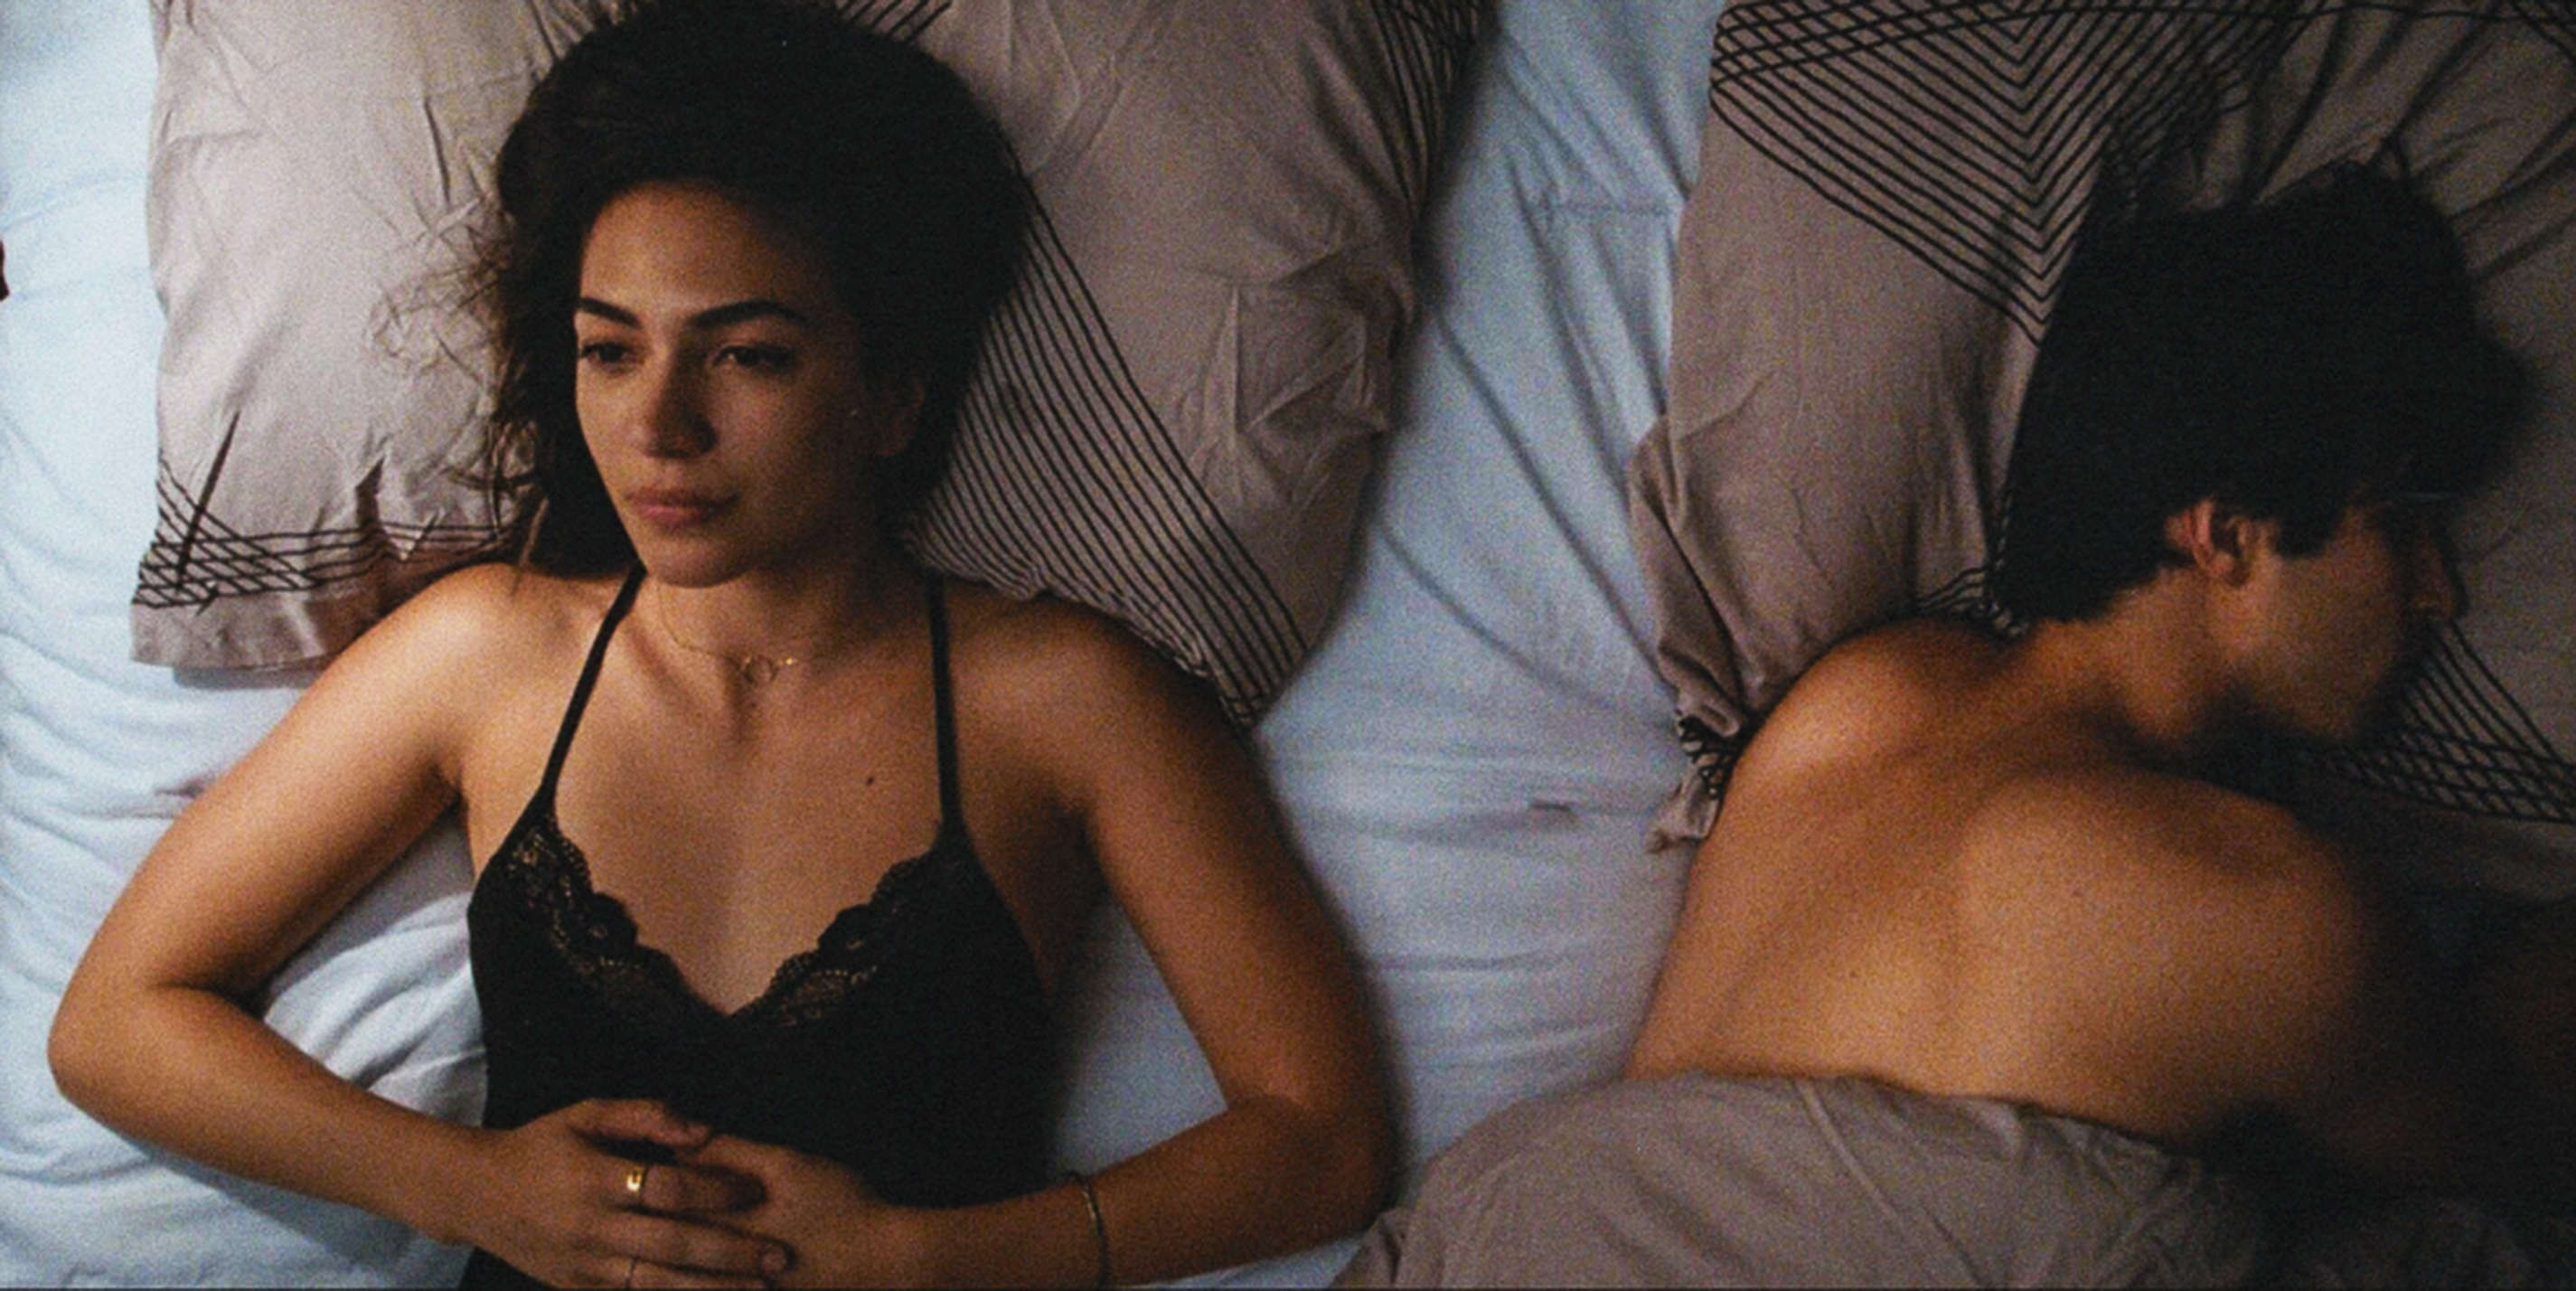 Hot Sex Se Felm 12saal - 25 Sexiest Movies on Amazon Prime - Hot Sex Scenes on Amazon